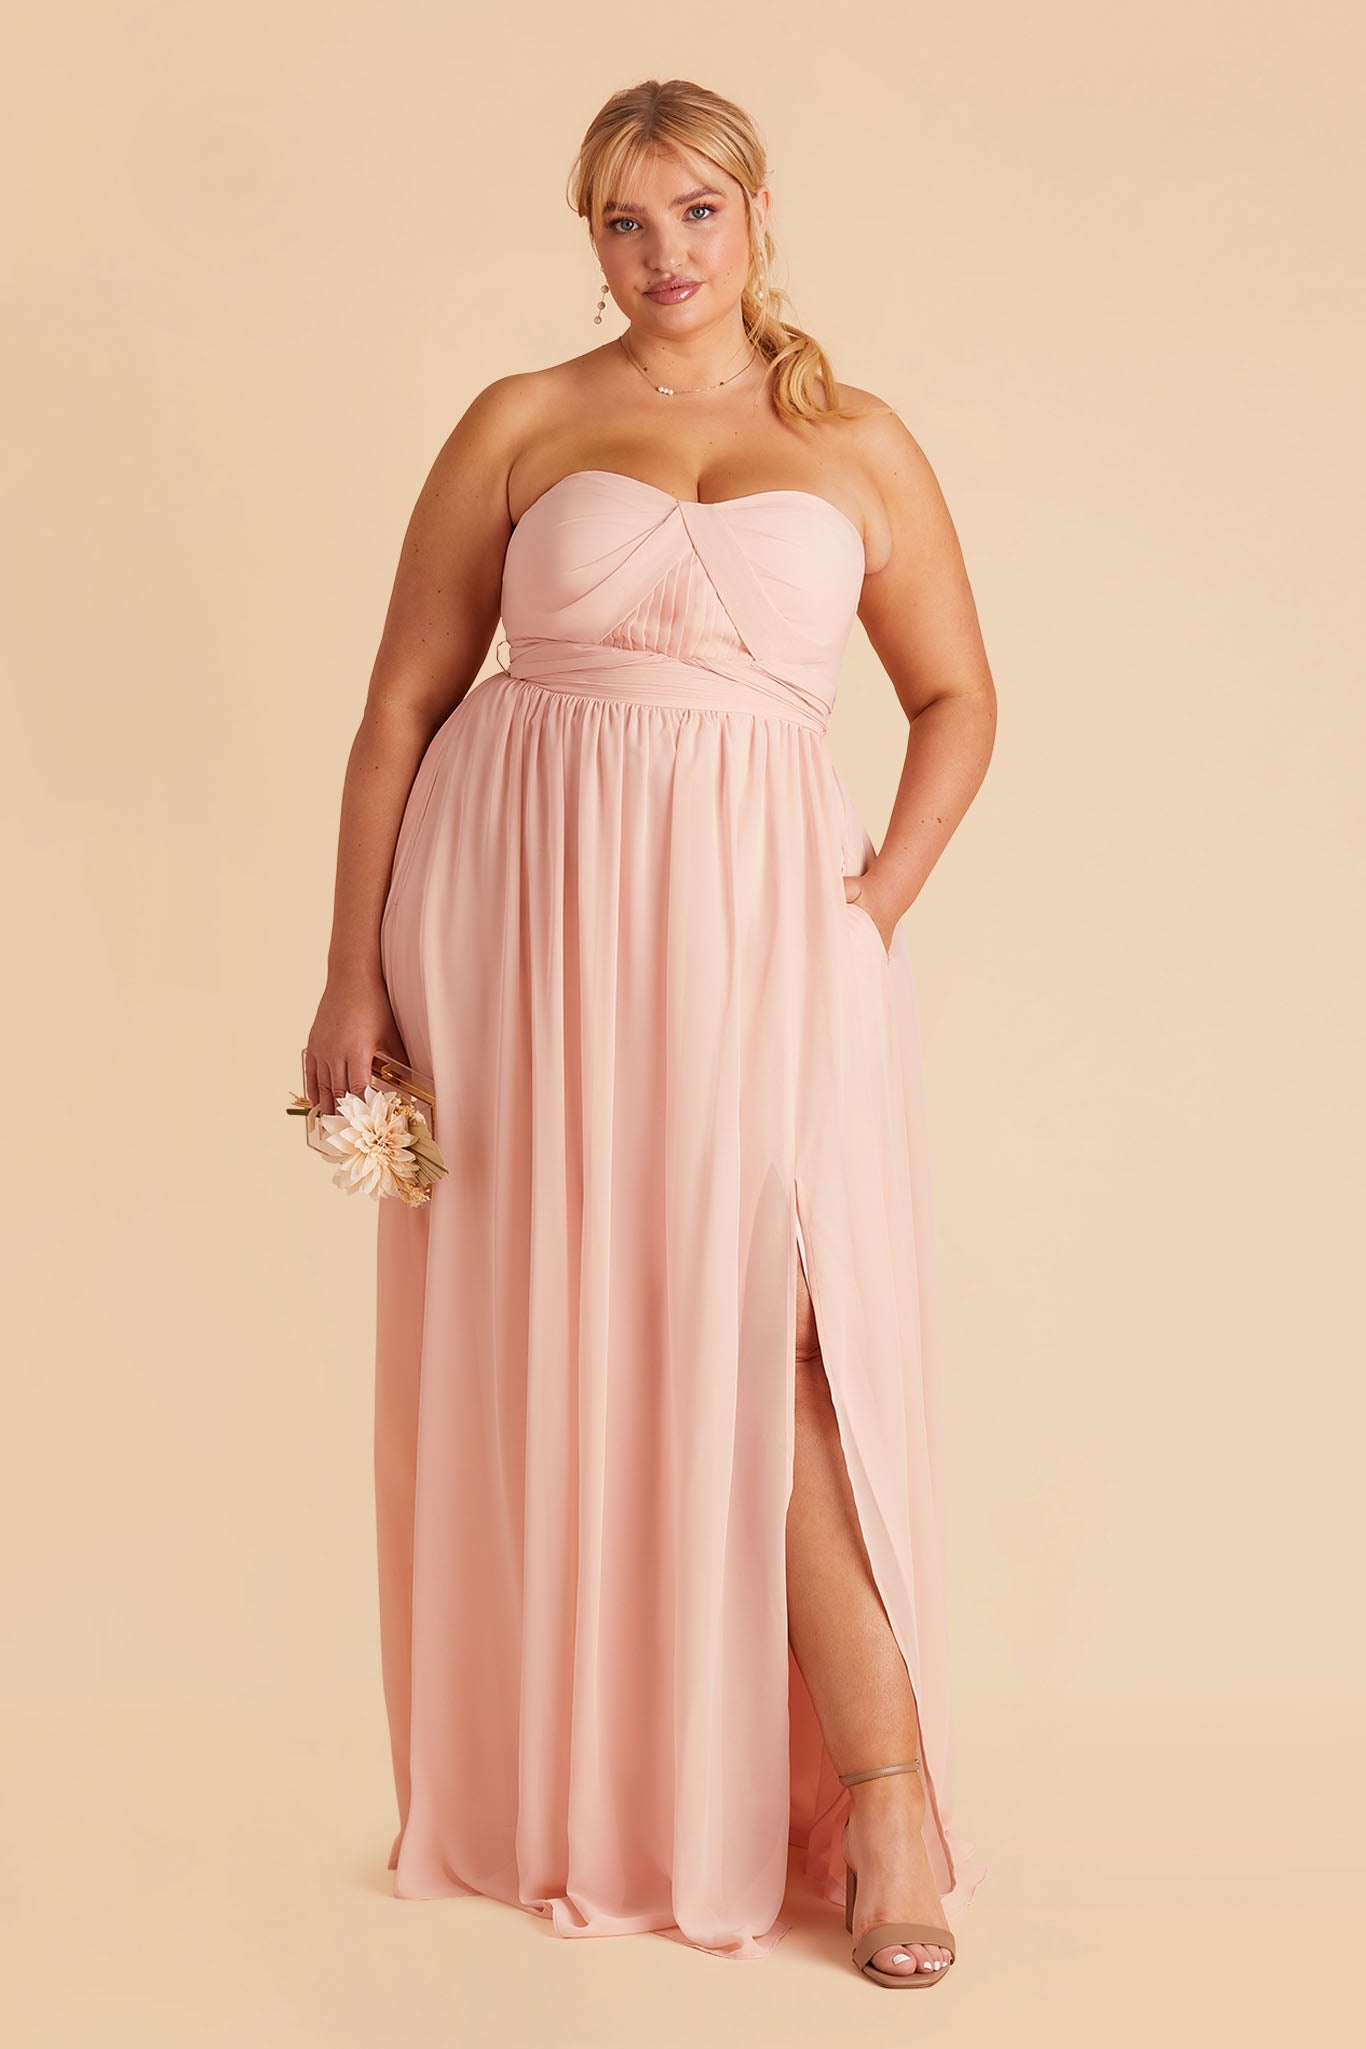 blush pink plus size dress